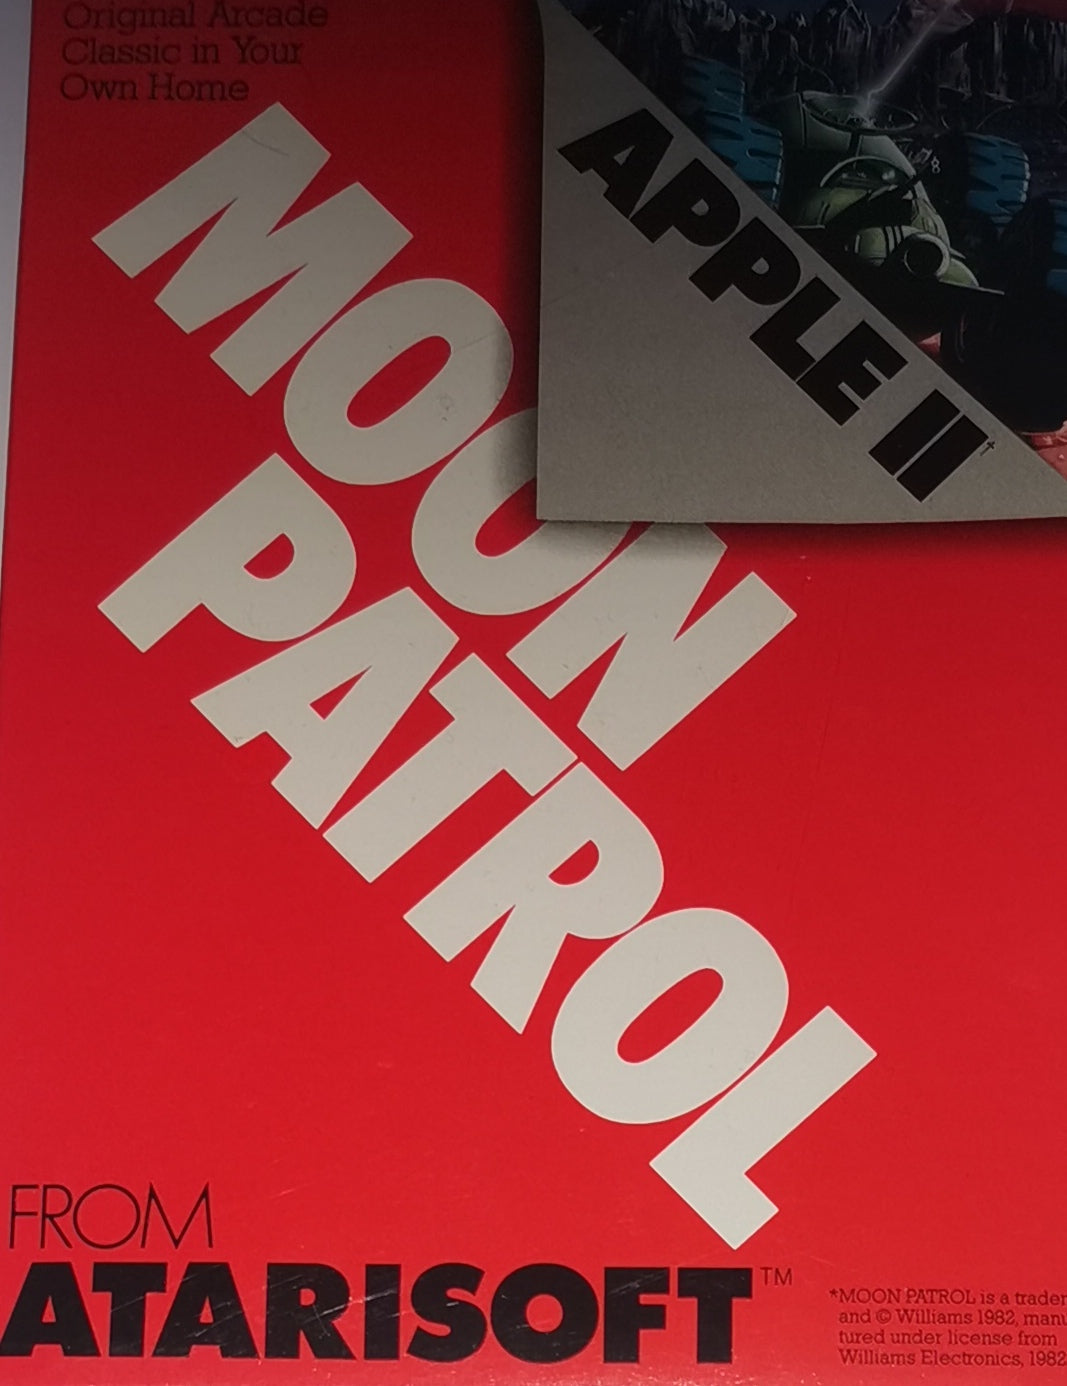 MOON PATROL by Atarisoft for Apple II [Neu]